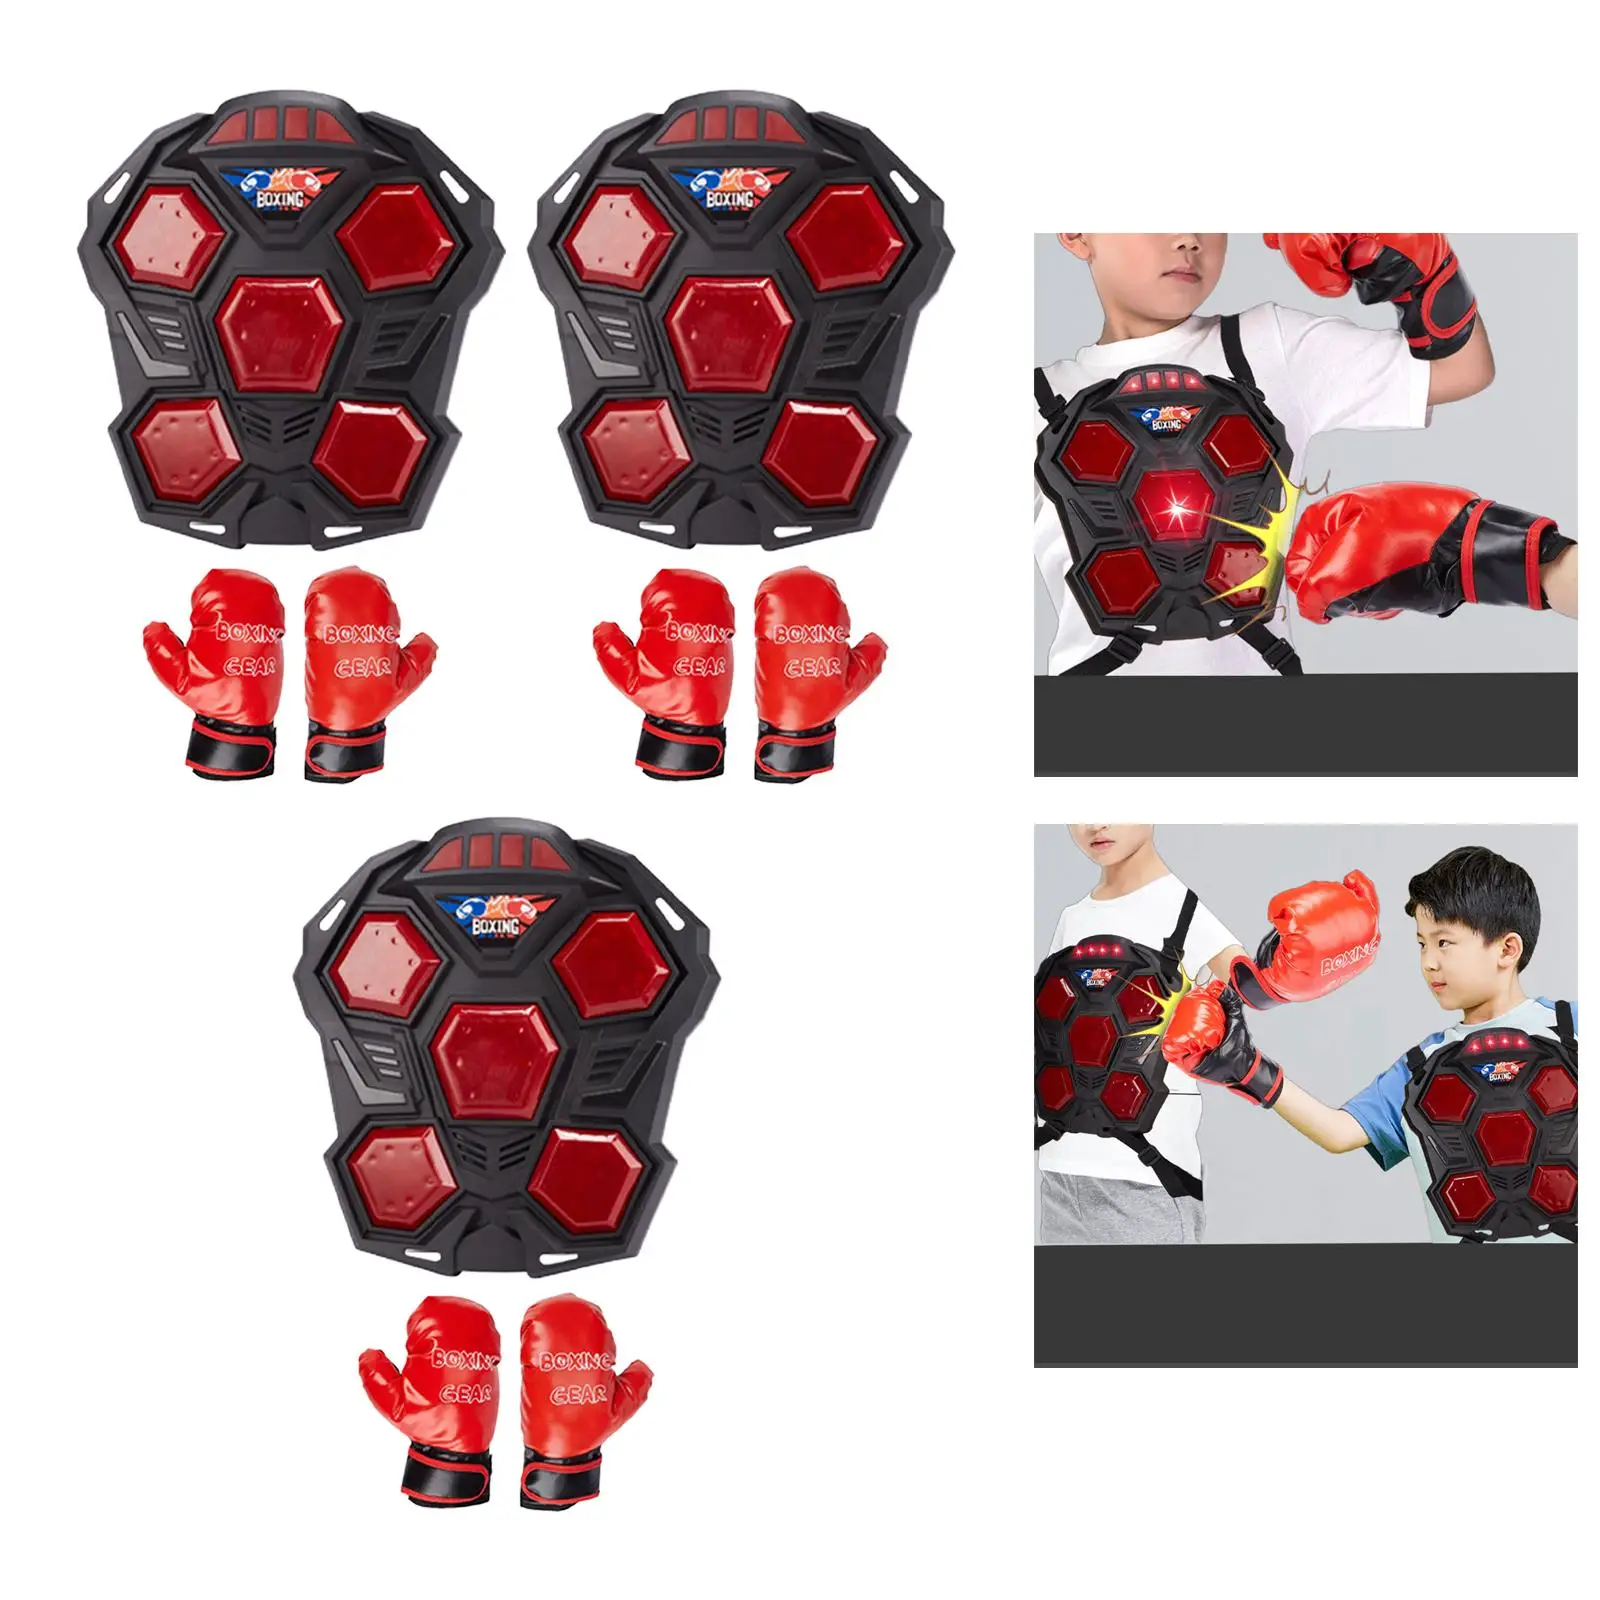 Electronic Boxing Machine Durable for Kids Boxing Training Equipment for Reaction Sanda Response Training Taekwondo Home Indoor